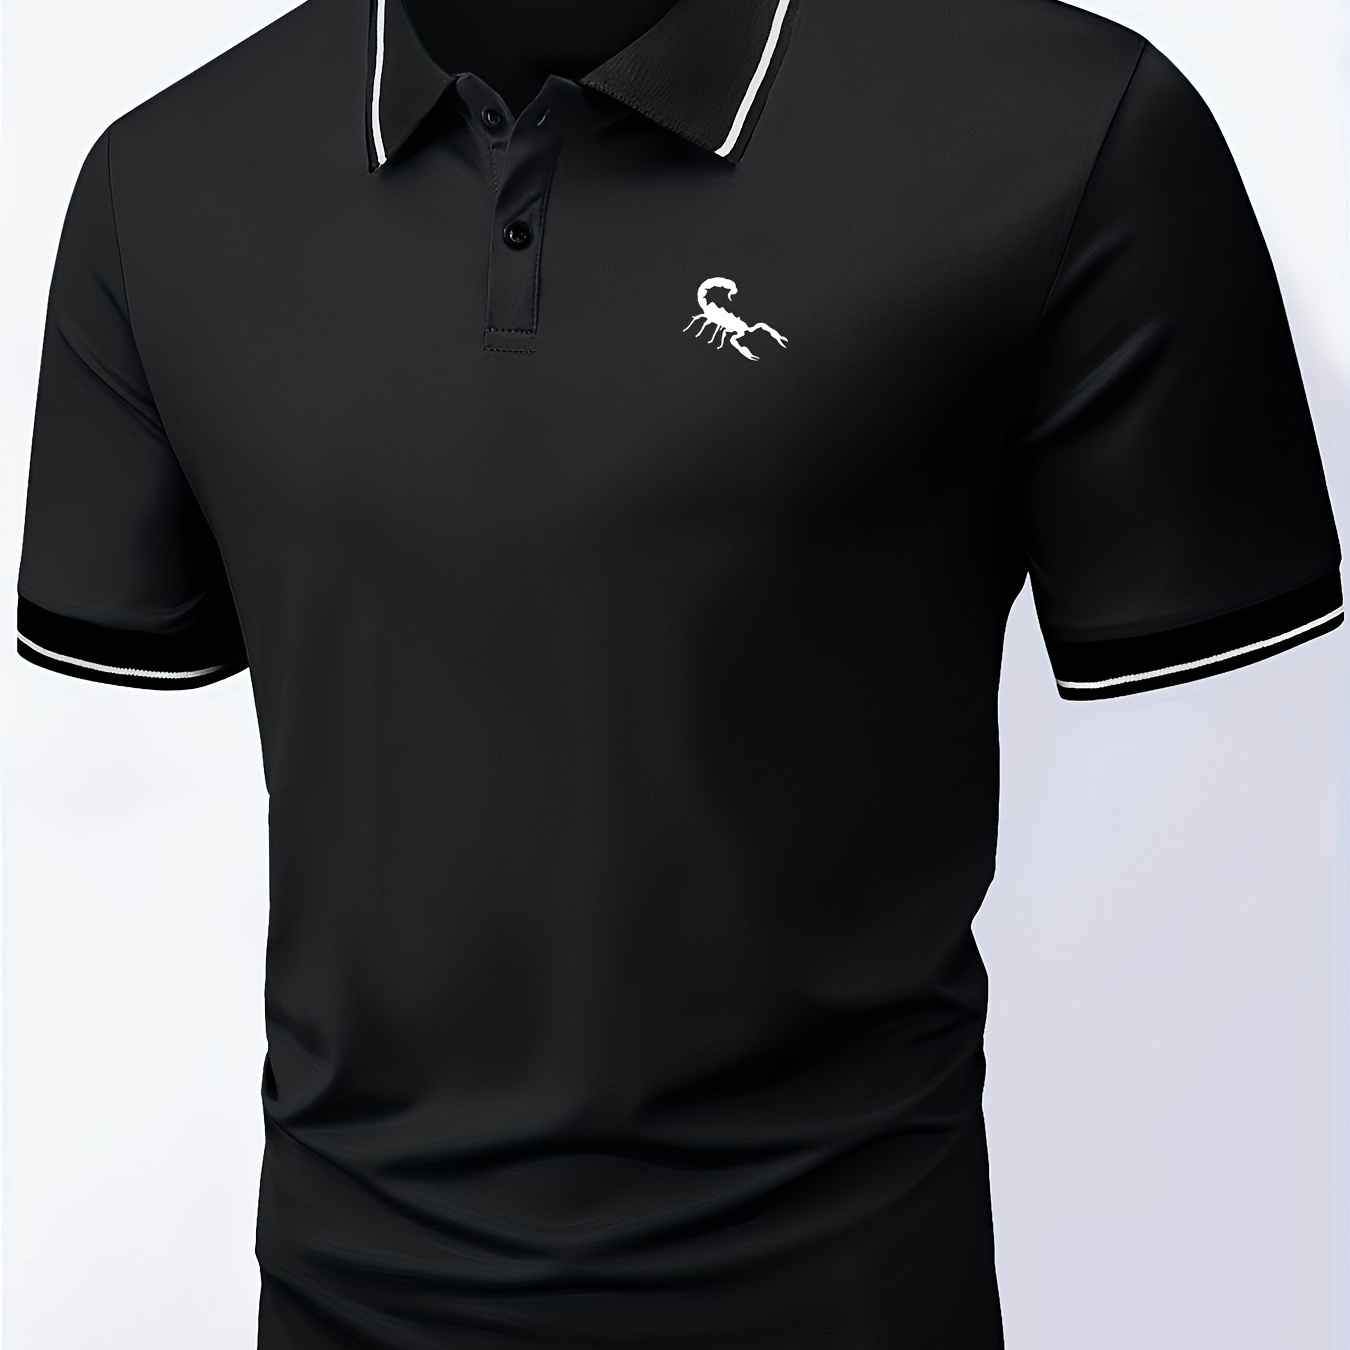 

Men's Golf Shirt, Scorpion Print Short Sleeve Breathable Tennis Shirt, Business Casual, Moisture Wicking